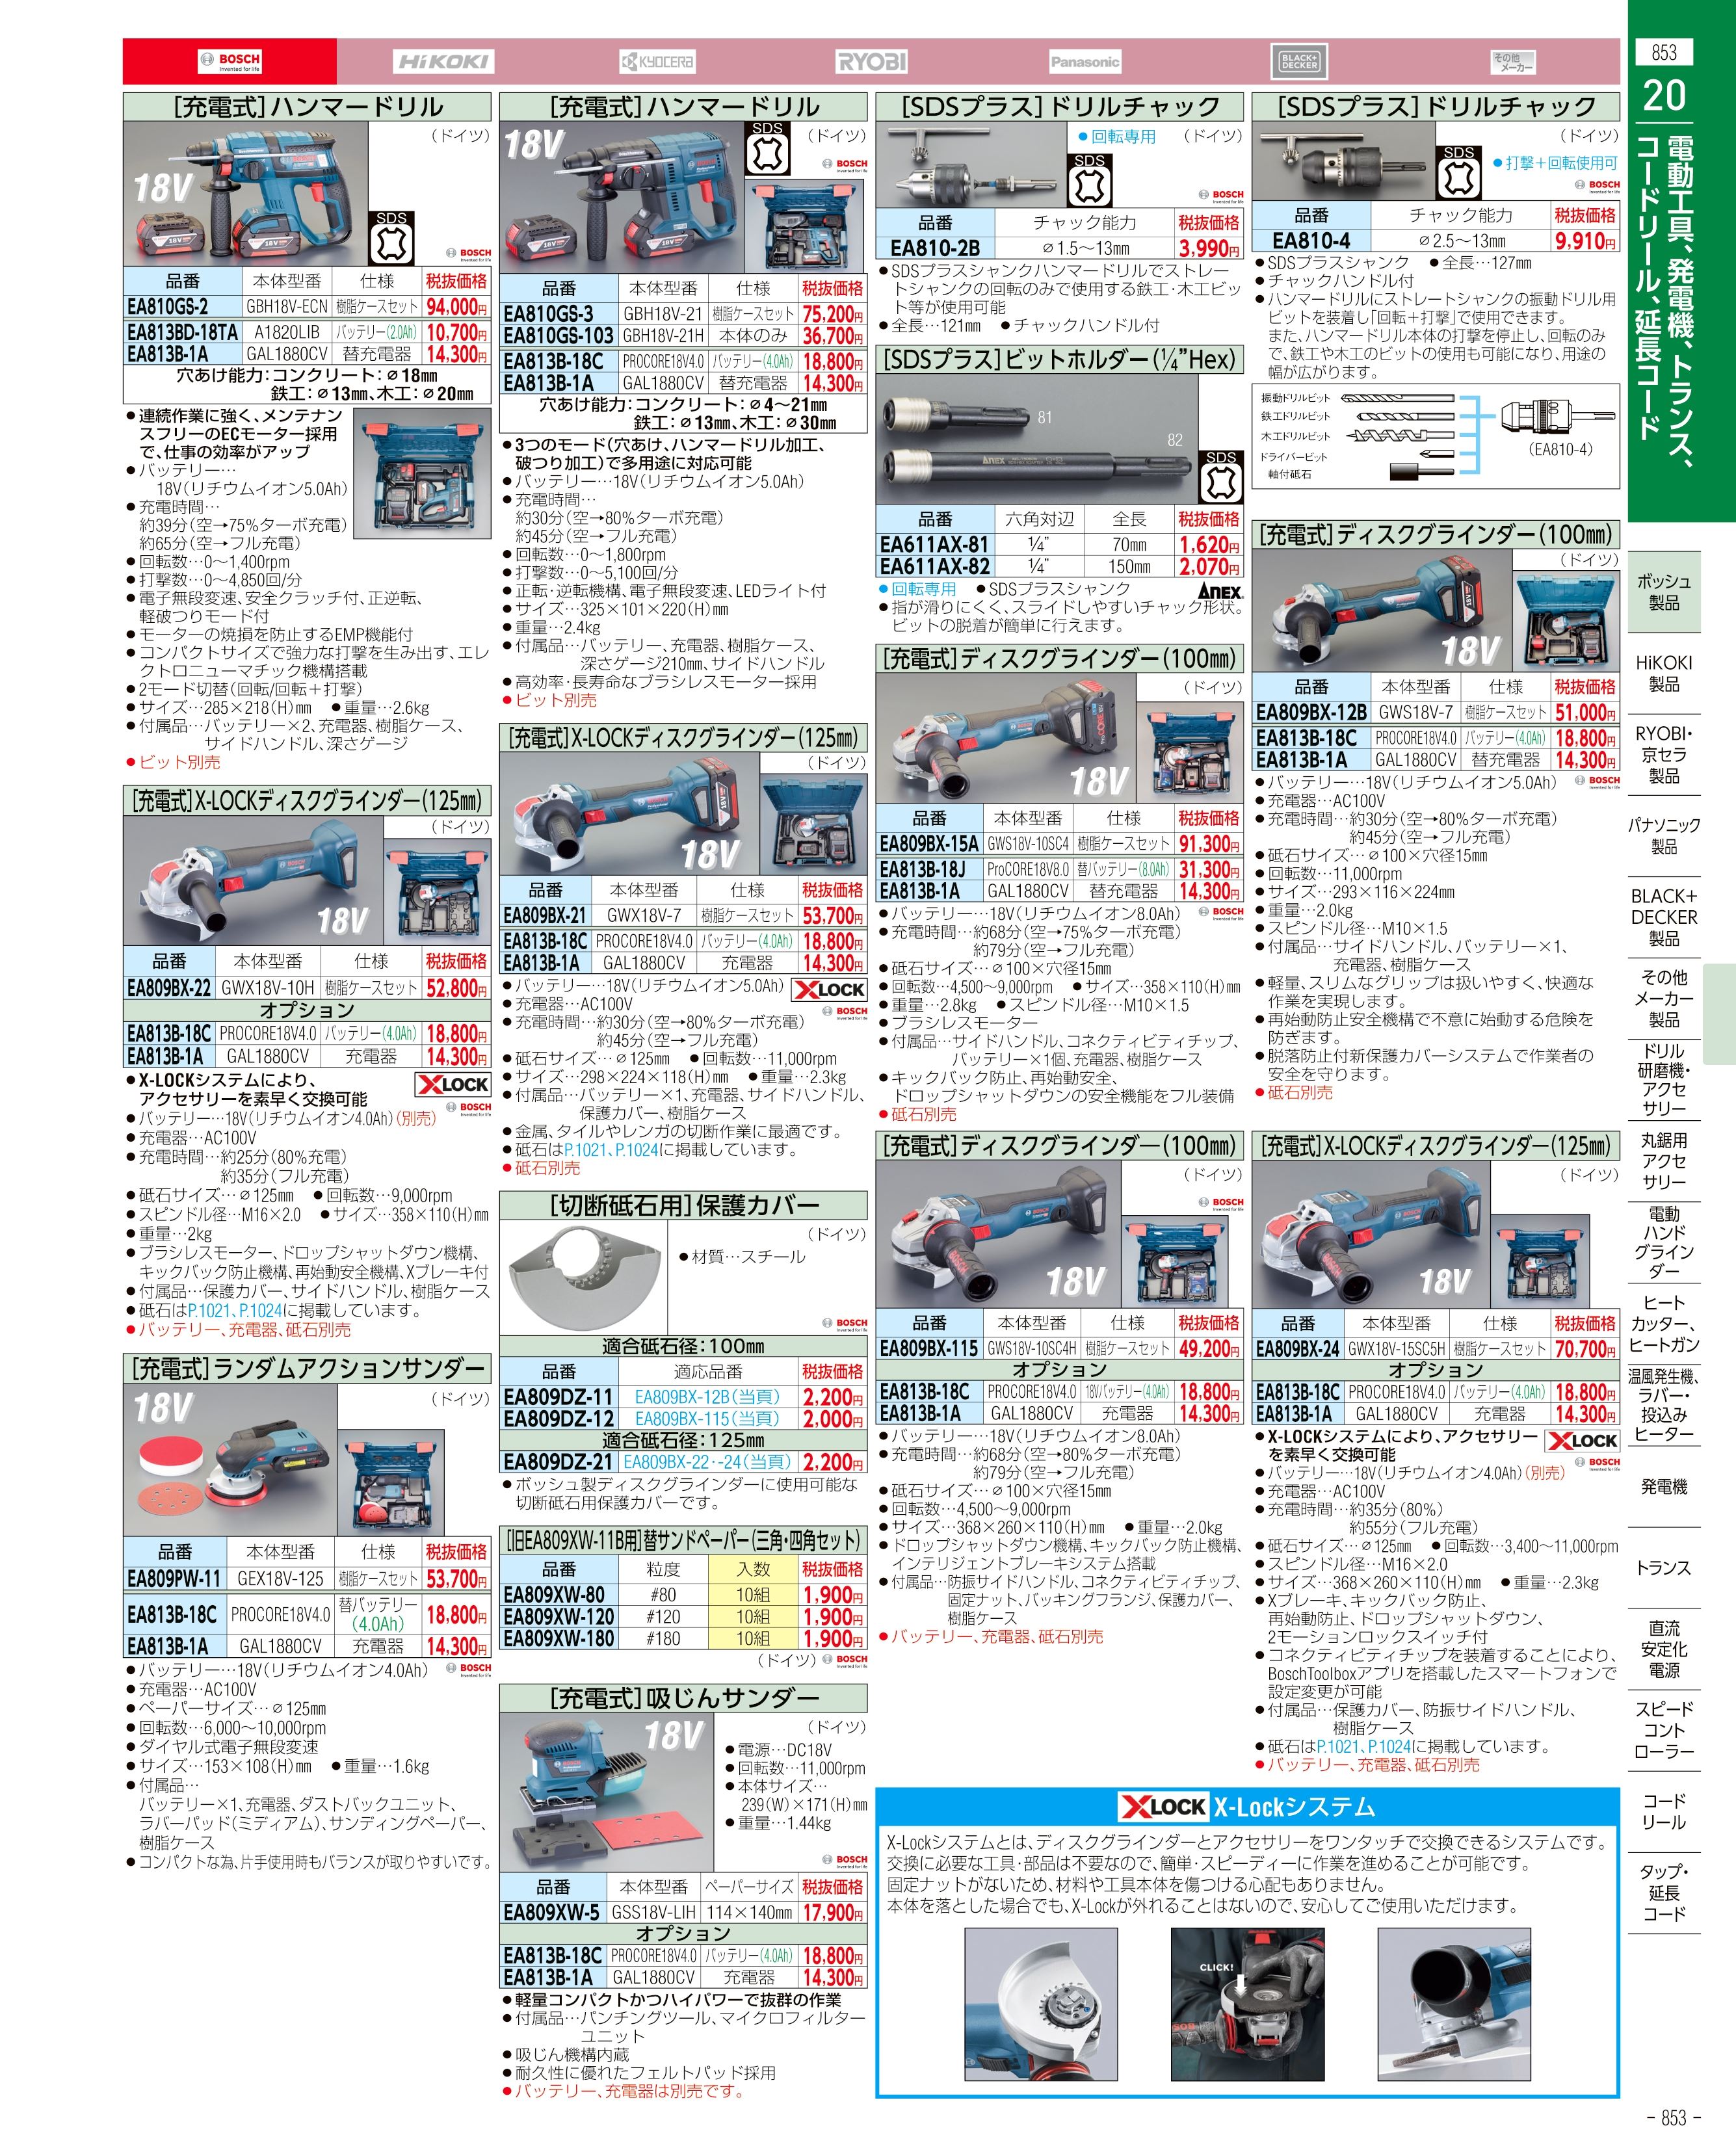 EA813A-41｜電動ドライバー用超短アングルヘッド｜株式会社エスコ